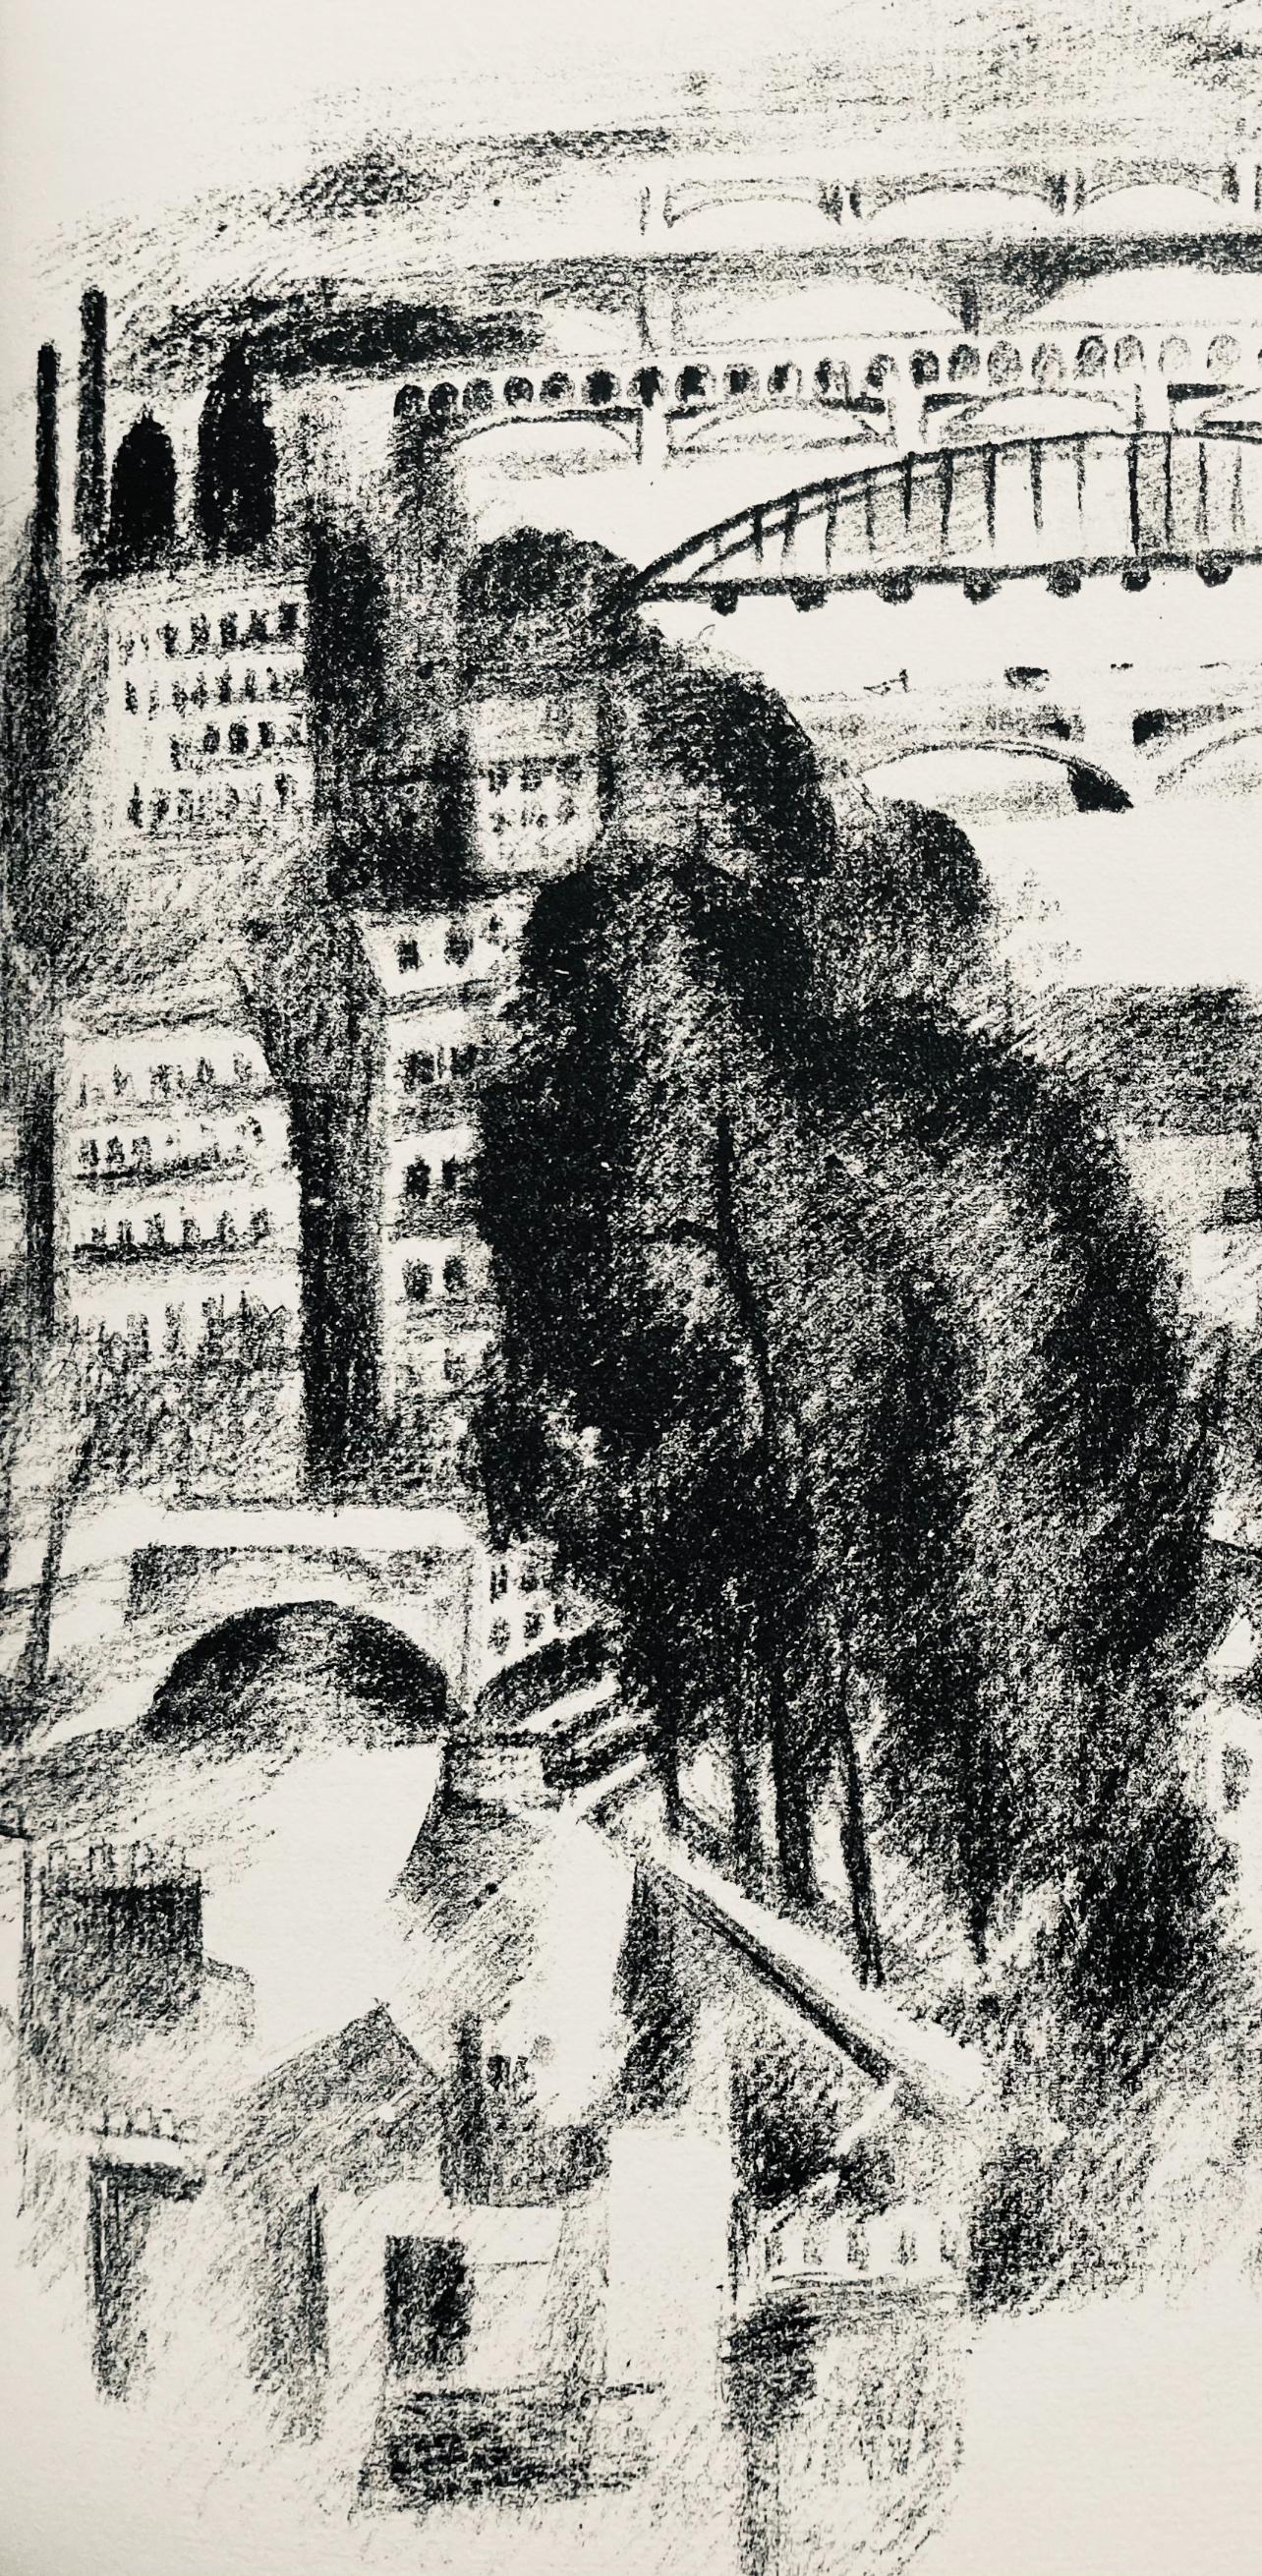 Delaunay, Ponts et passerelle de Passy (Habasque 720-728), Allo! Paris! (after) - Print by Robert Delaunay